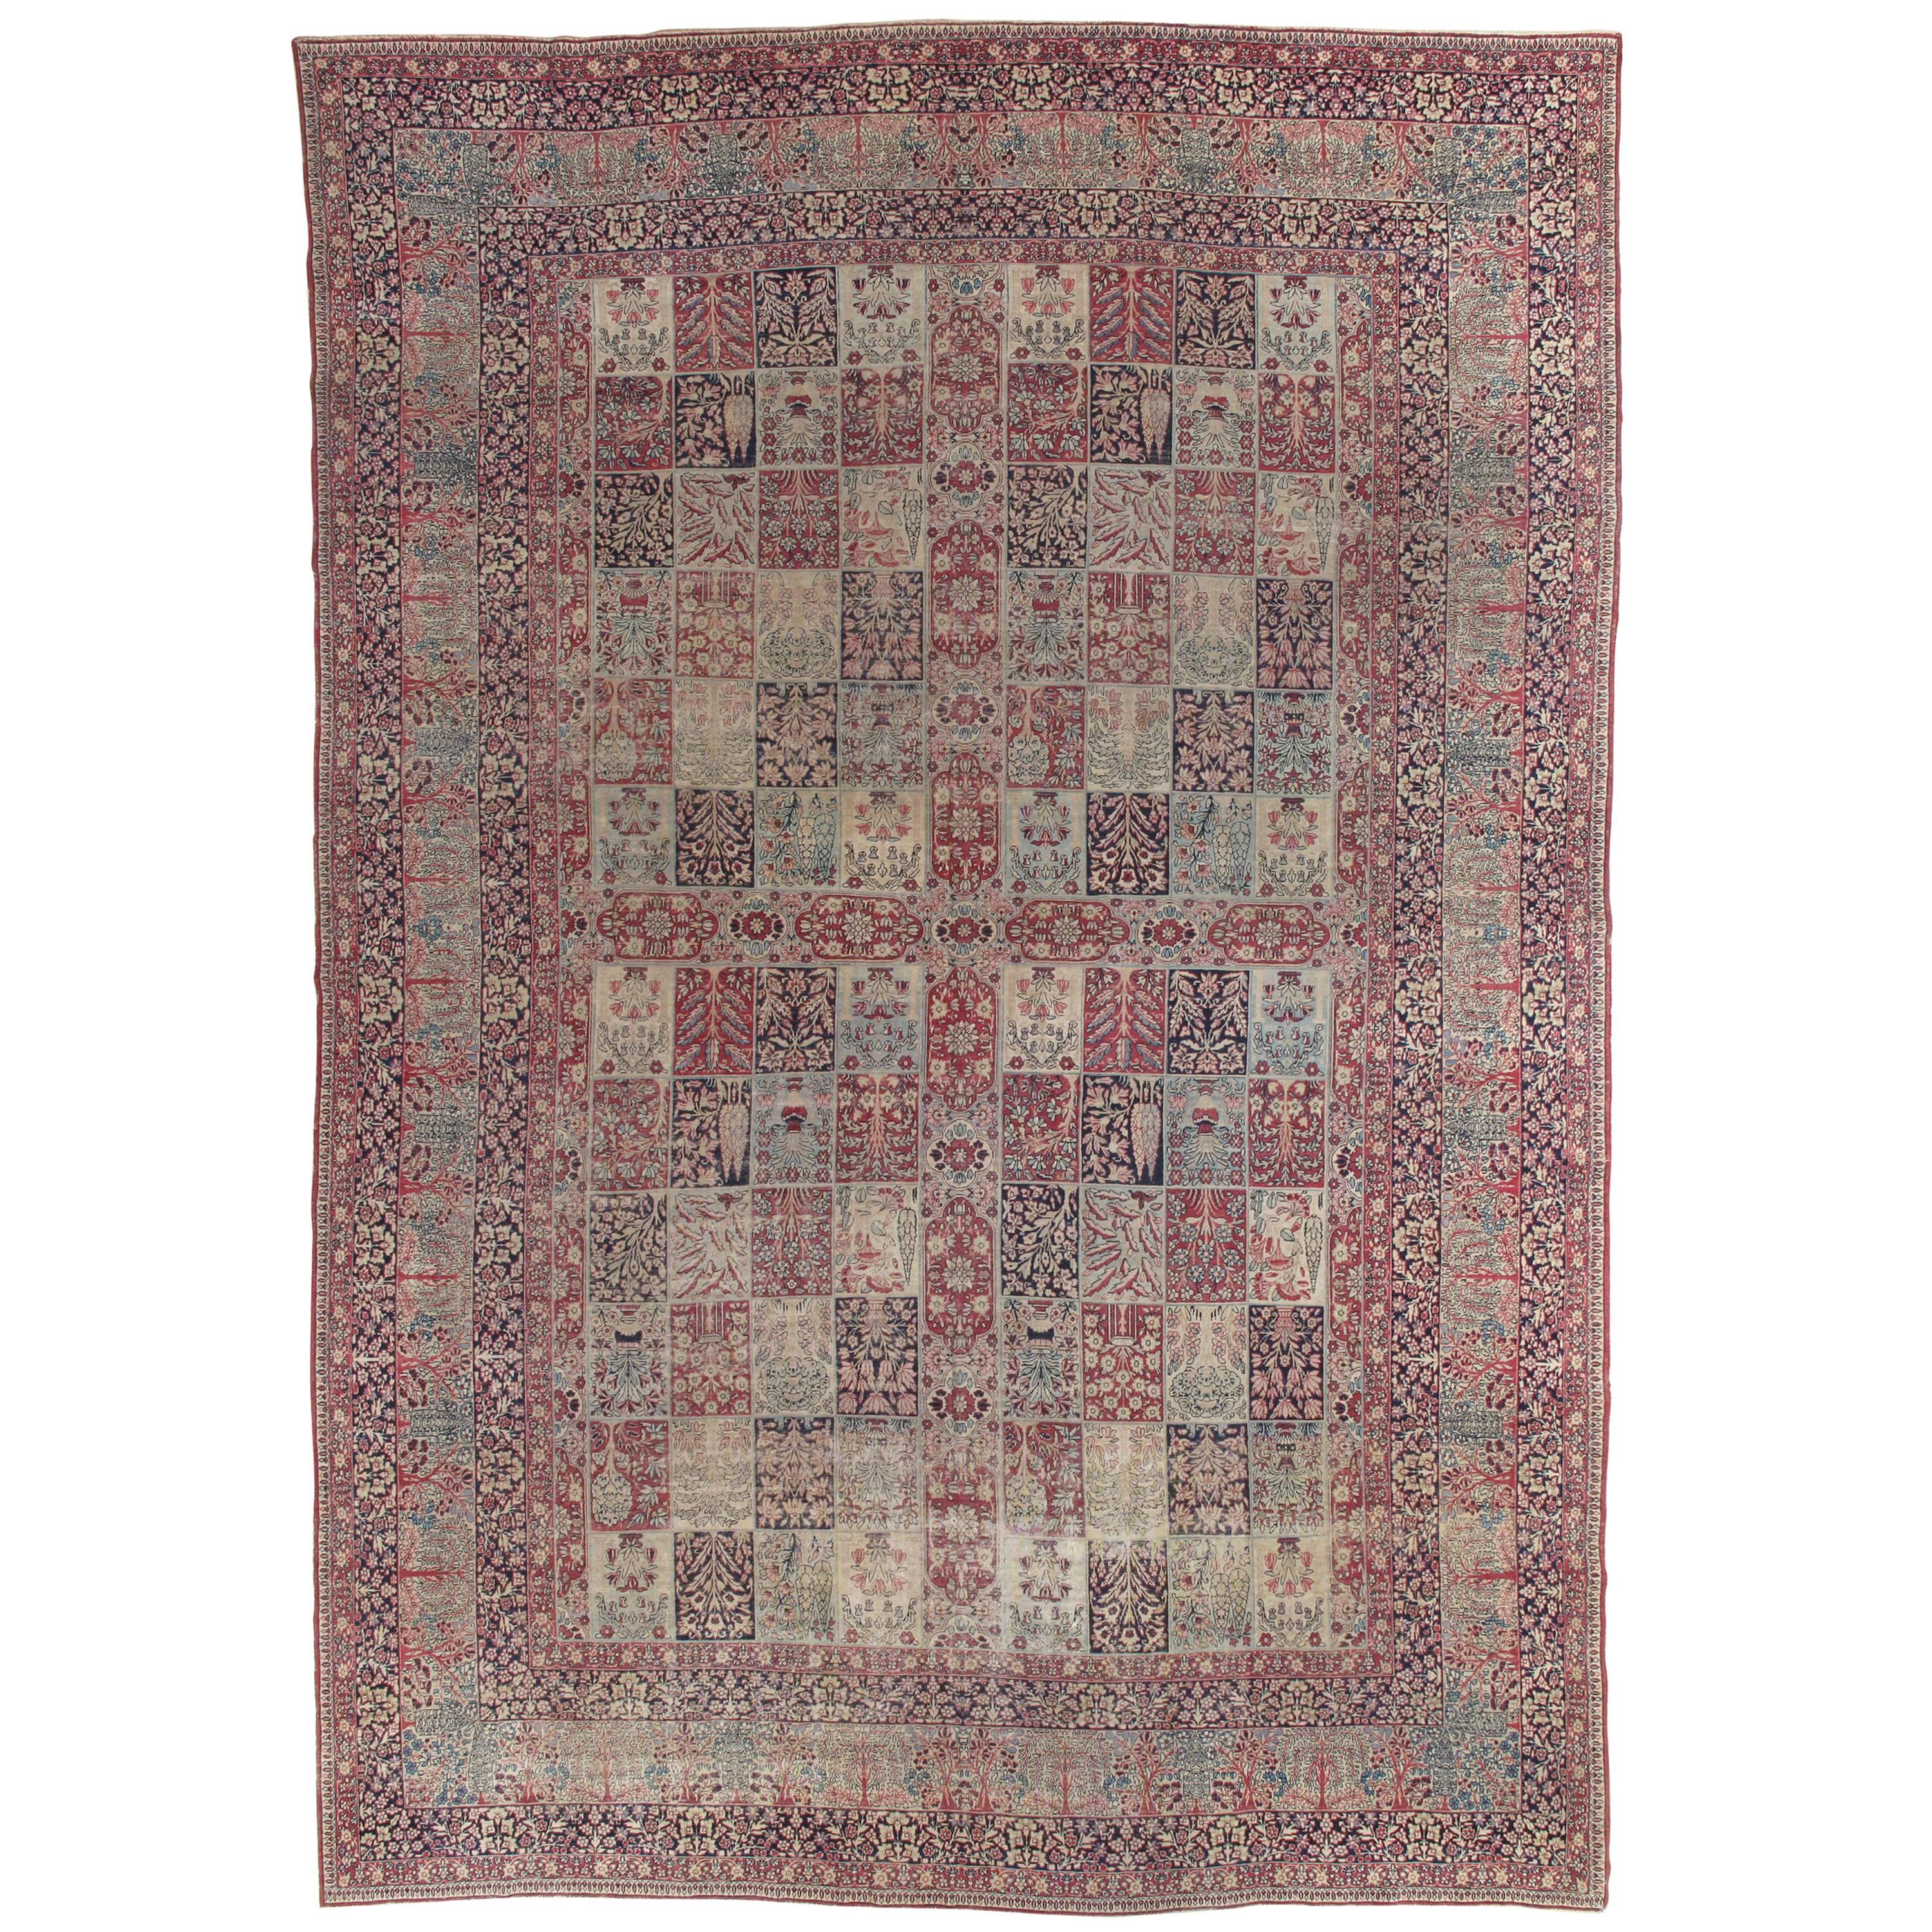 Antique Lavar Kerman Carpet, Handmade Wool Carpet, Multi-Color, Ivory, Red Wine For Sale